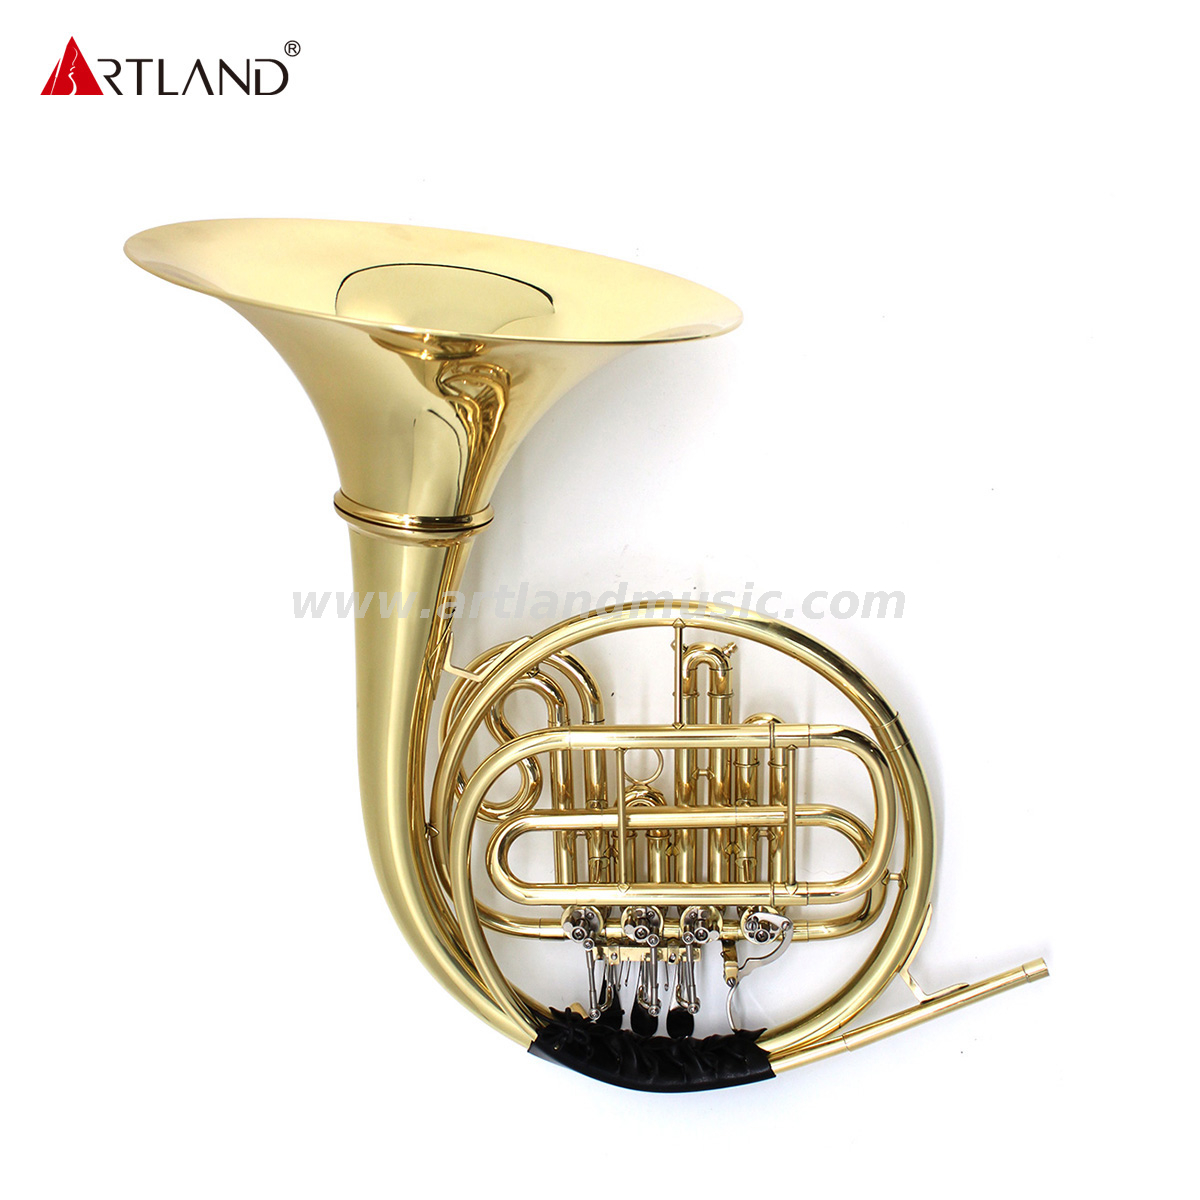 4 Key Single French horn